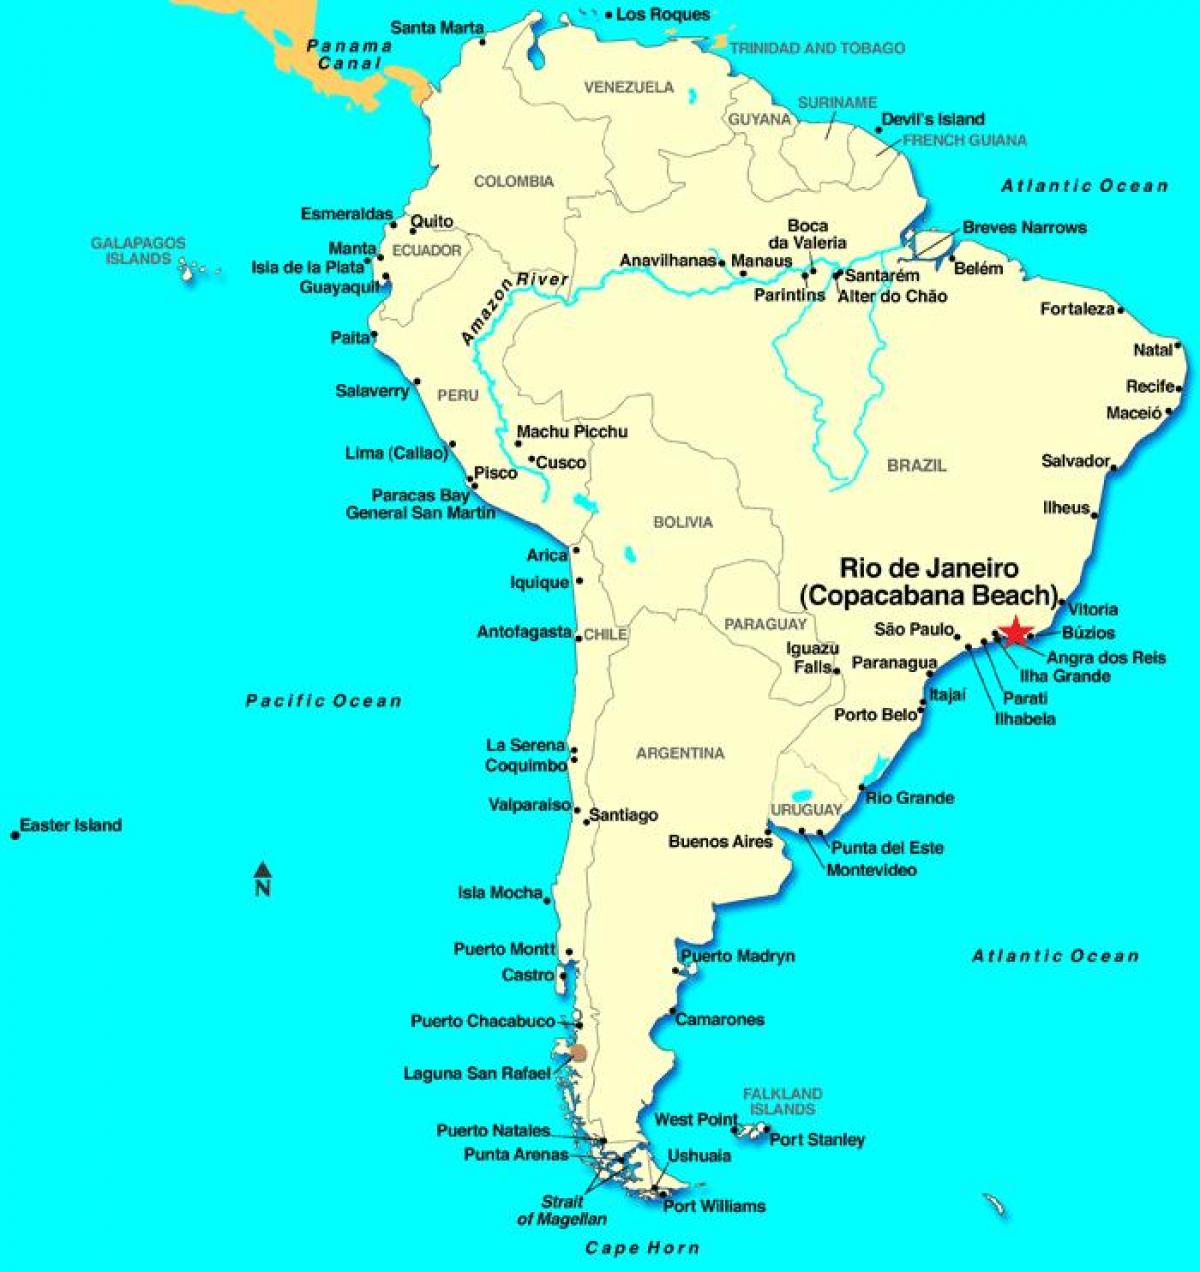 Map of Rio de Janeiro in South America